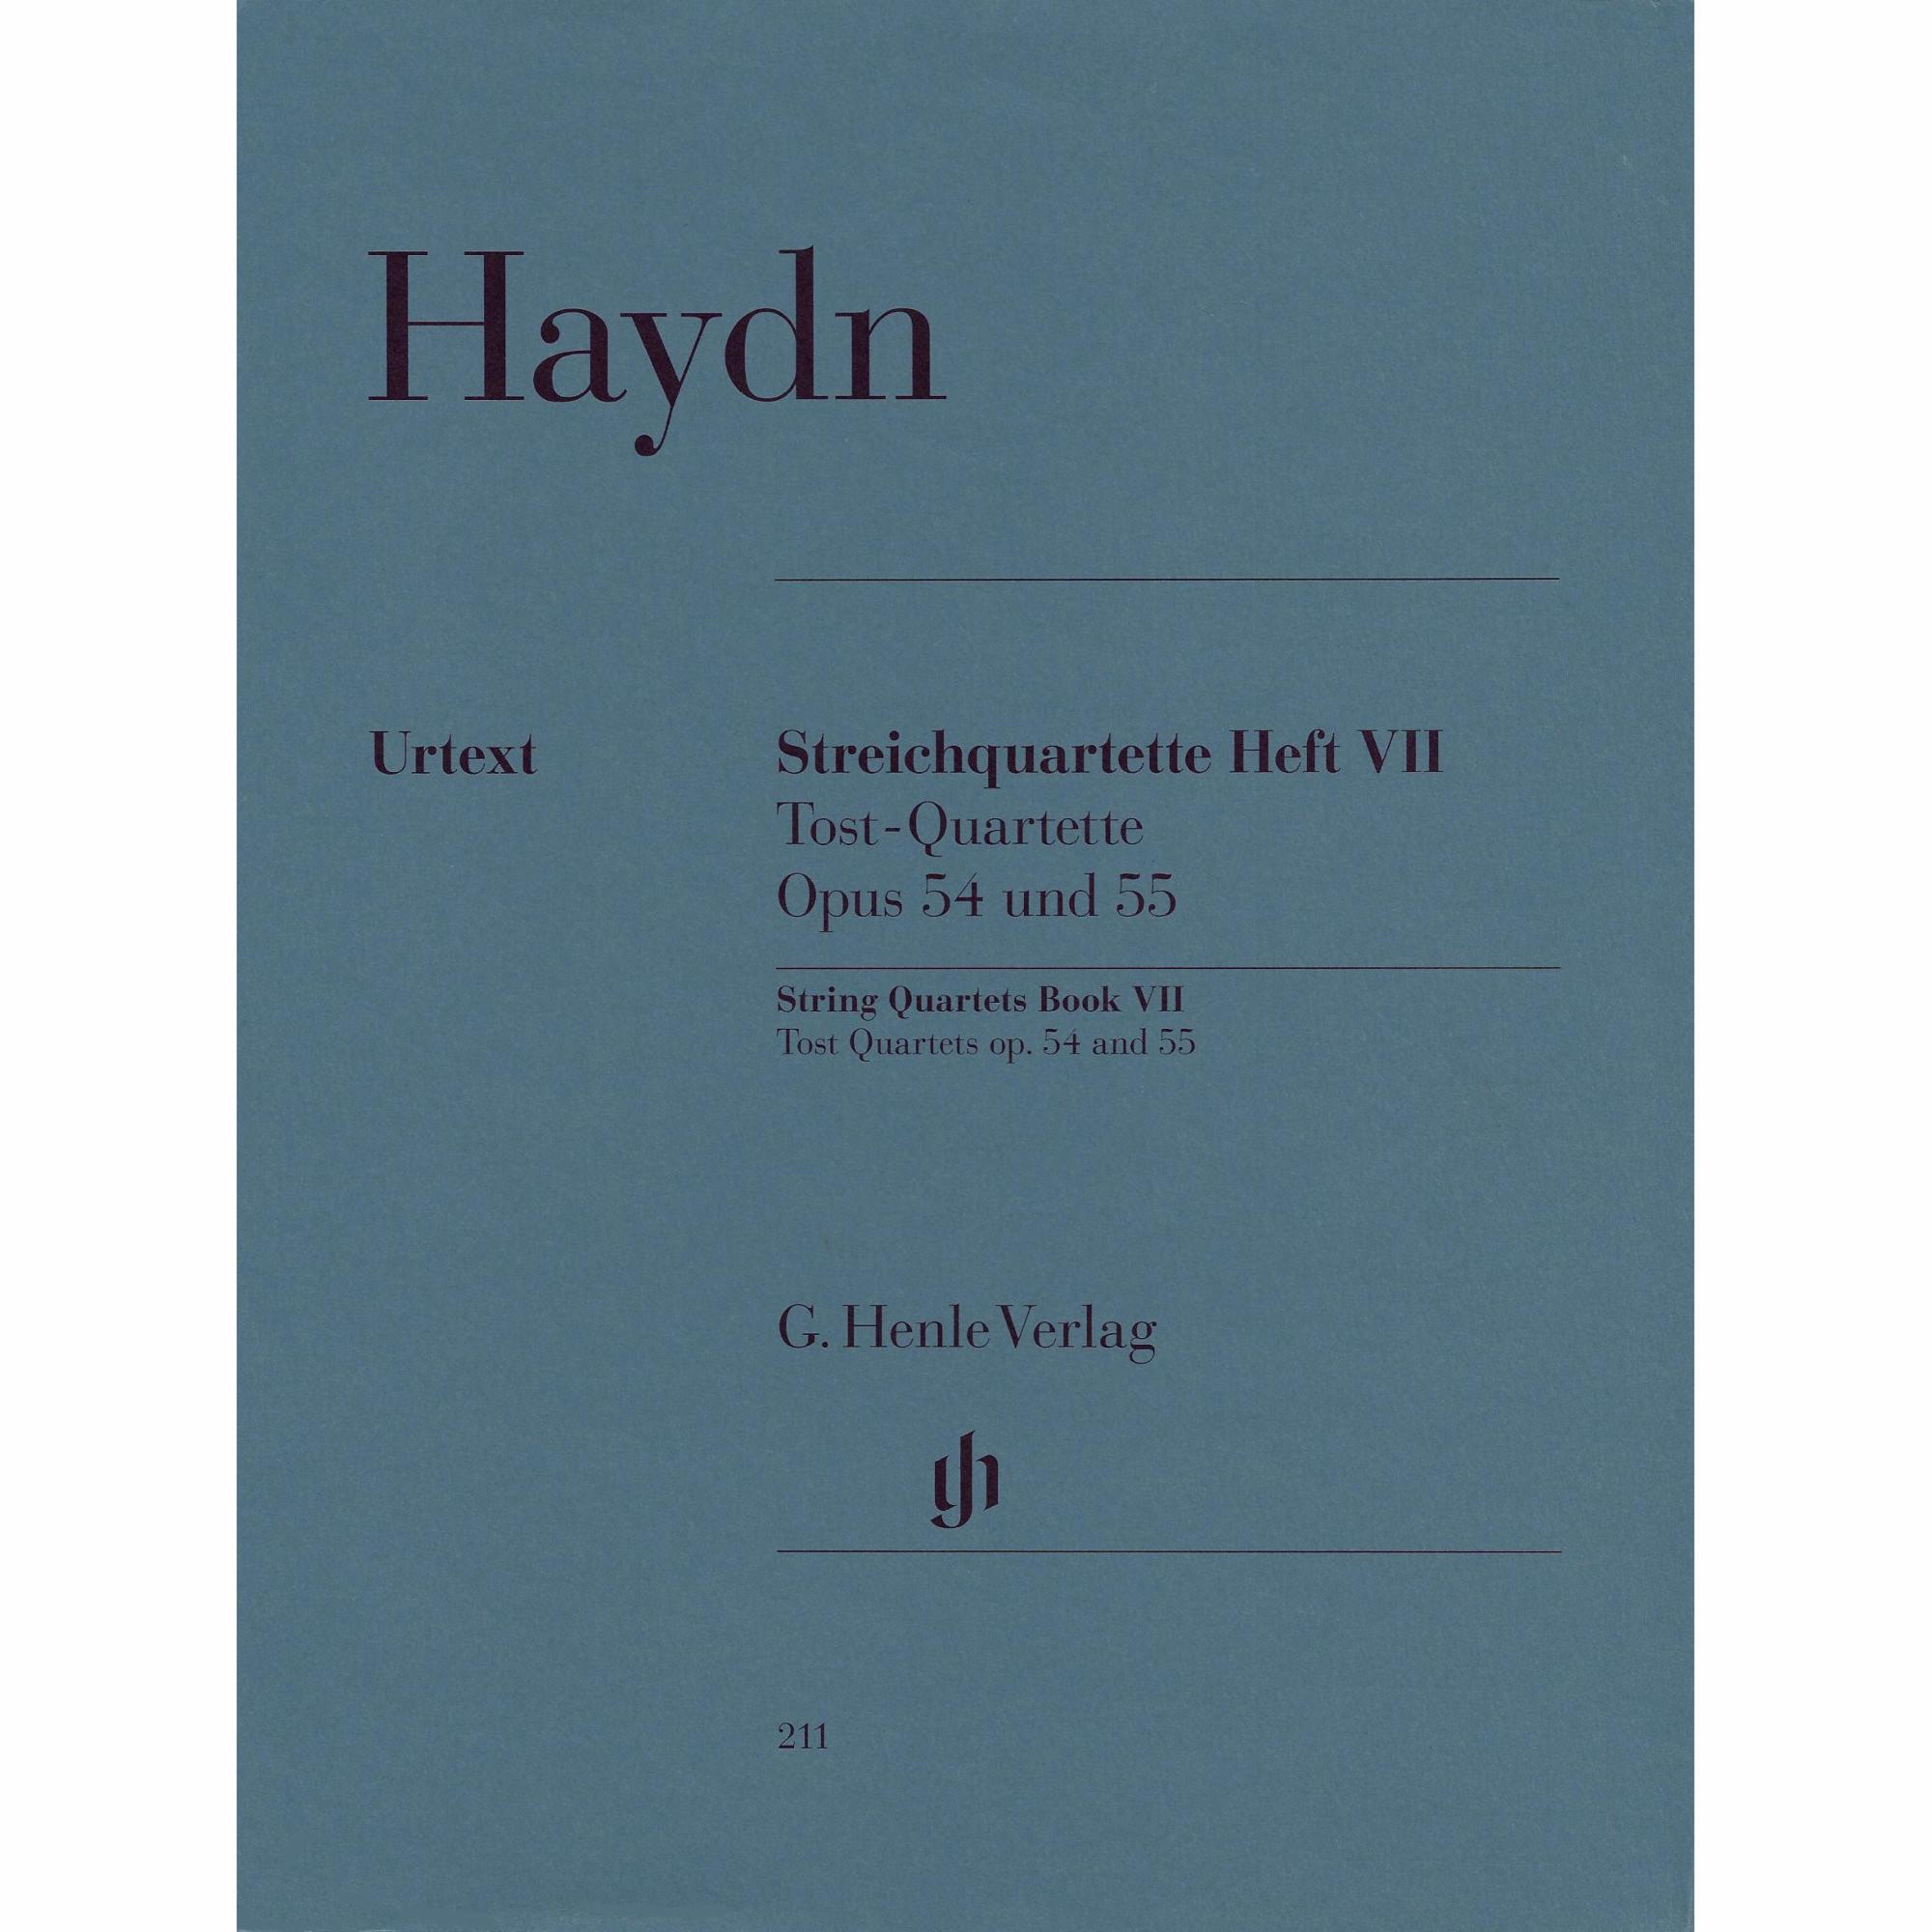 Haydn -- String Quartets, Book VII